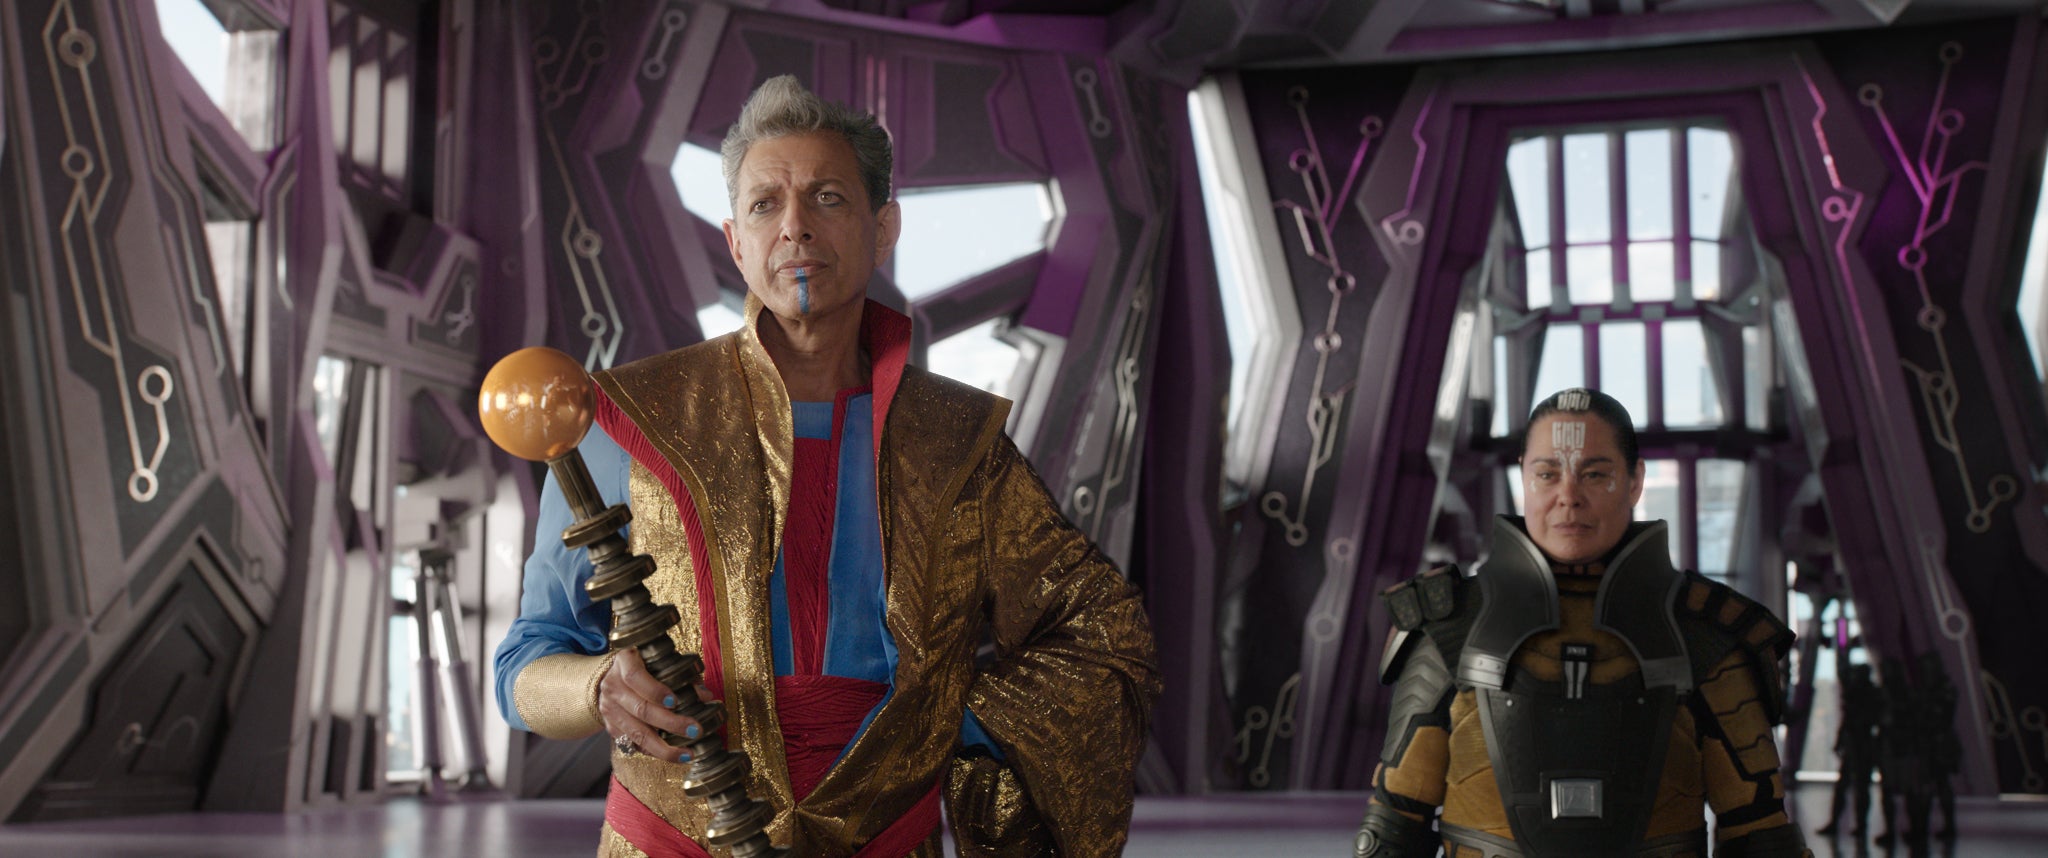 Jeff Goldblum in 'Thor: Ragnarok'